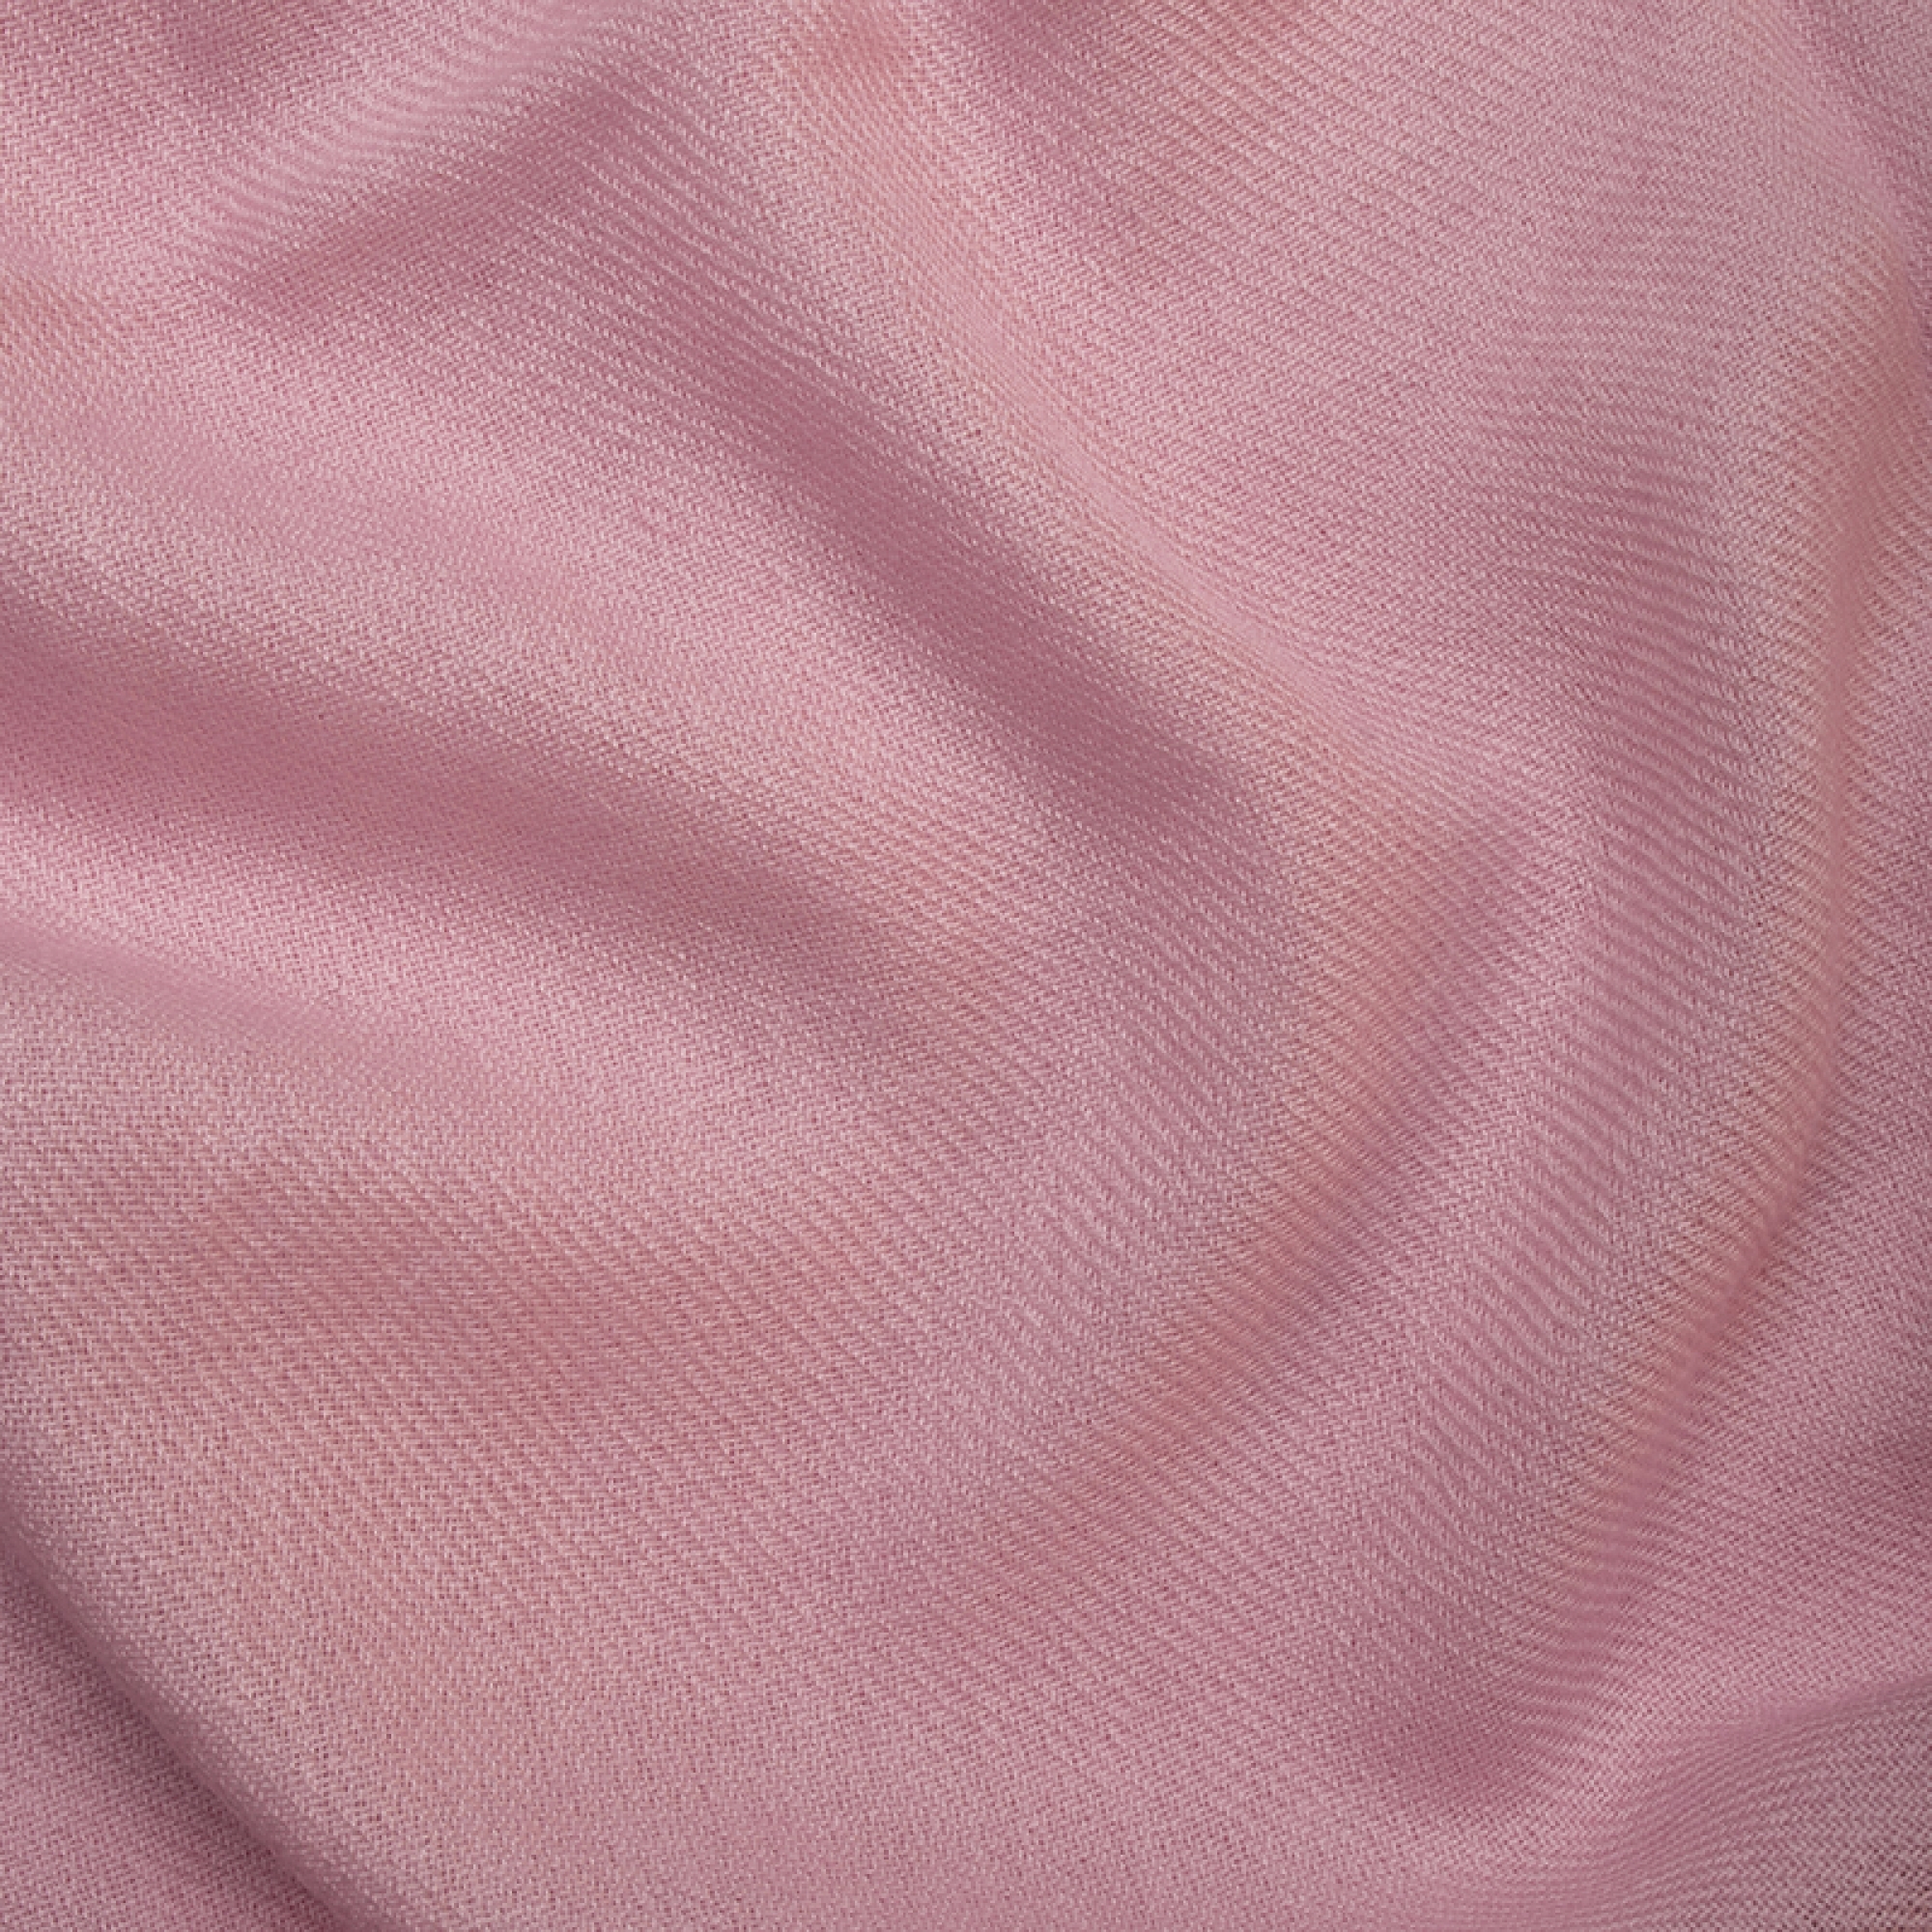 Cashmere accessories blanket toodoo plain s 140 x 200 shinking violet 140 x 200 cm